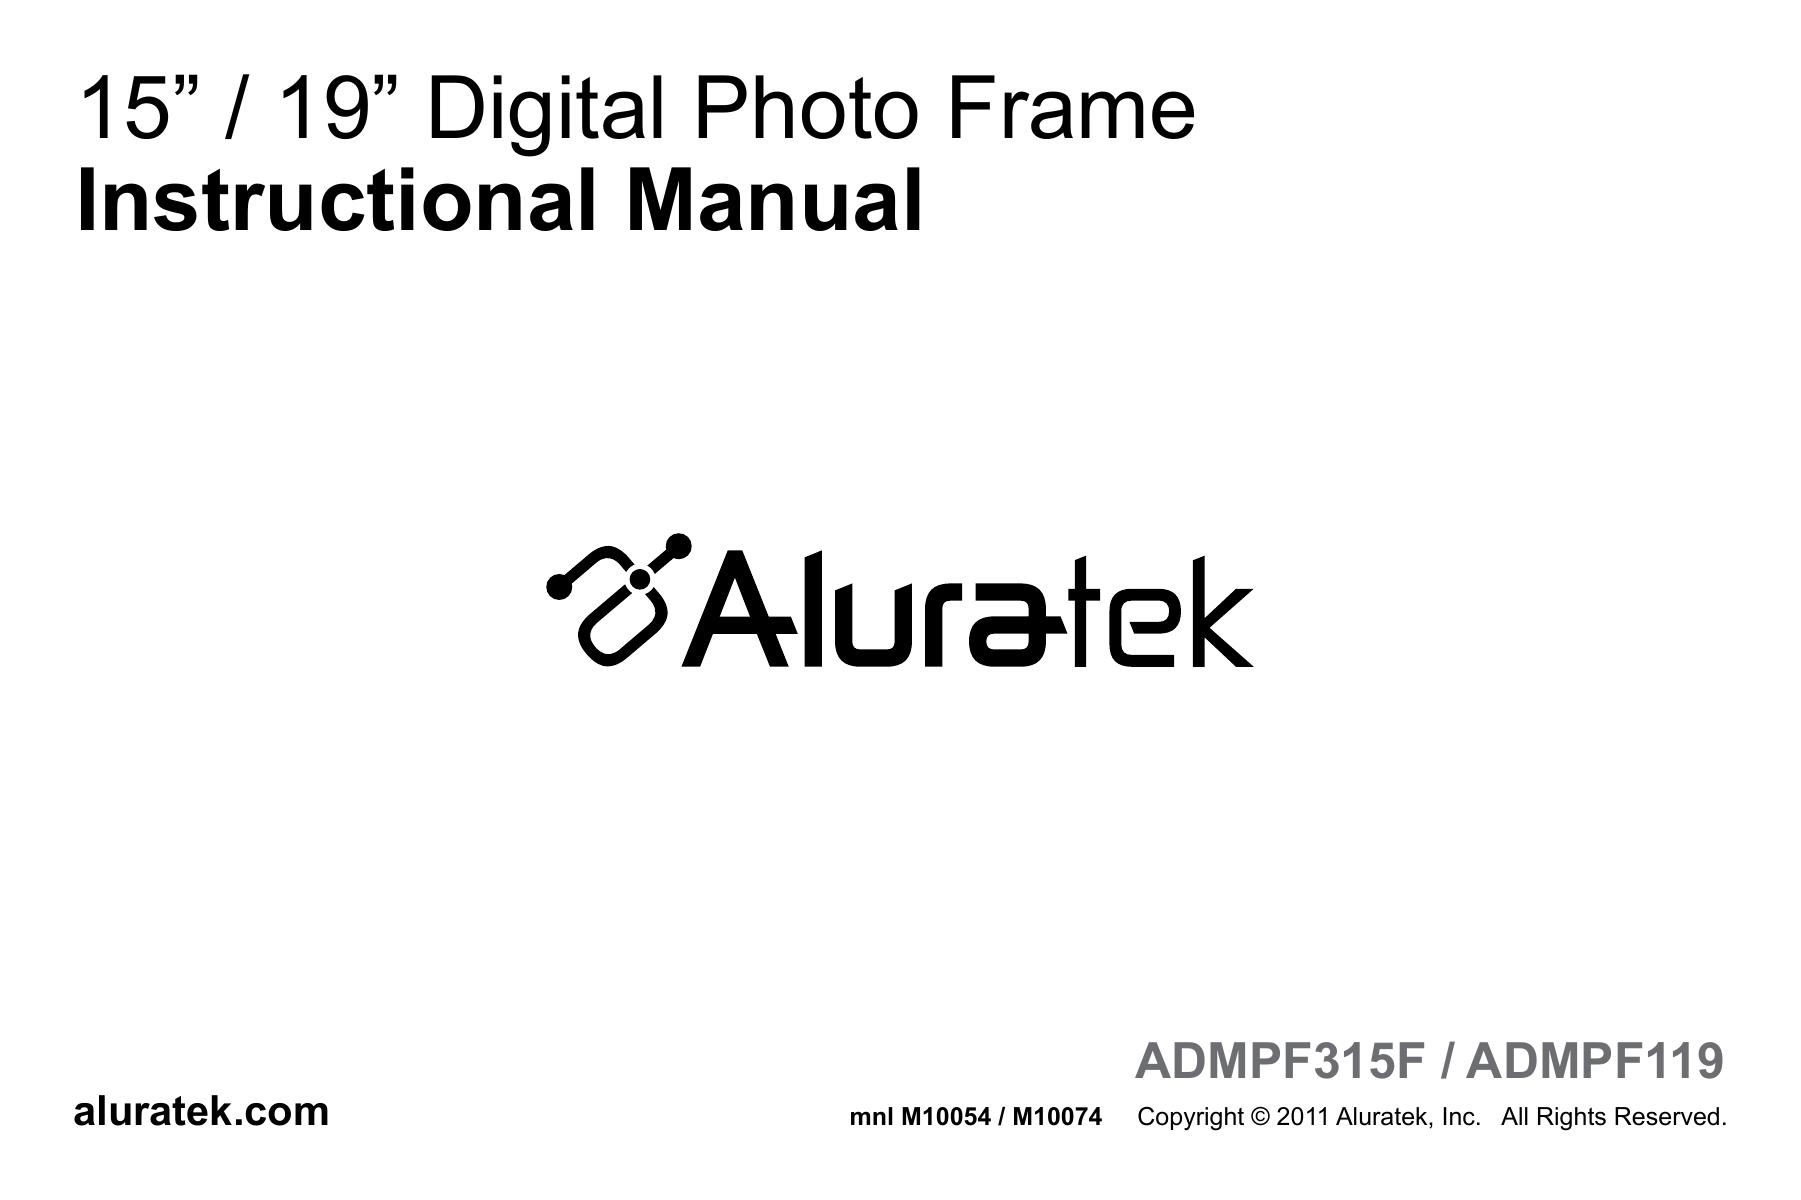 Aluratek ADMPF119 Digital Photo Frame User Manual